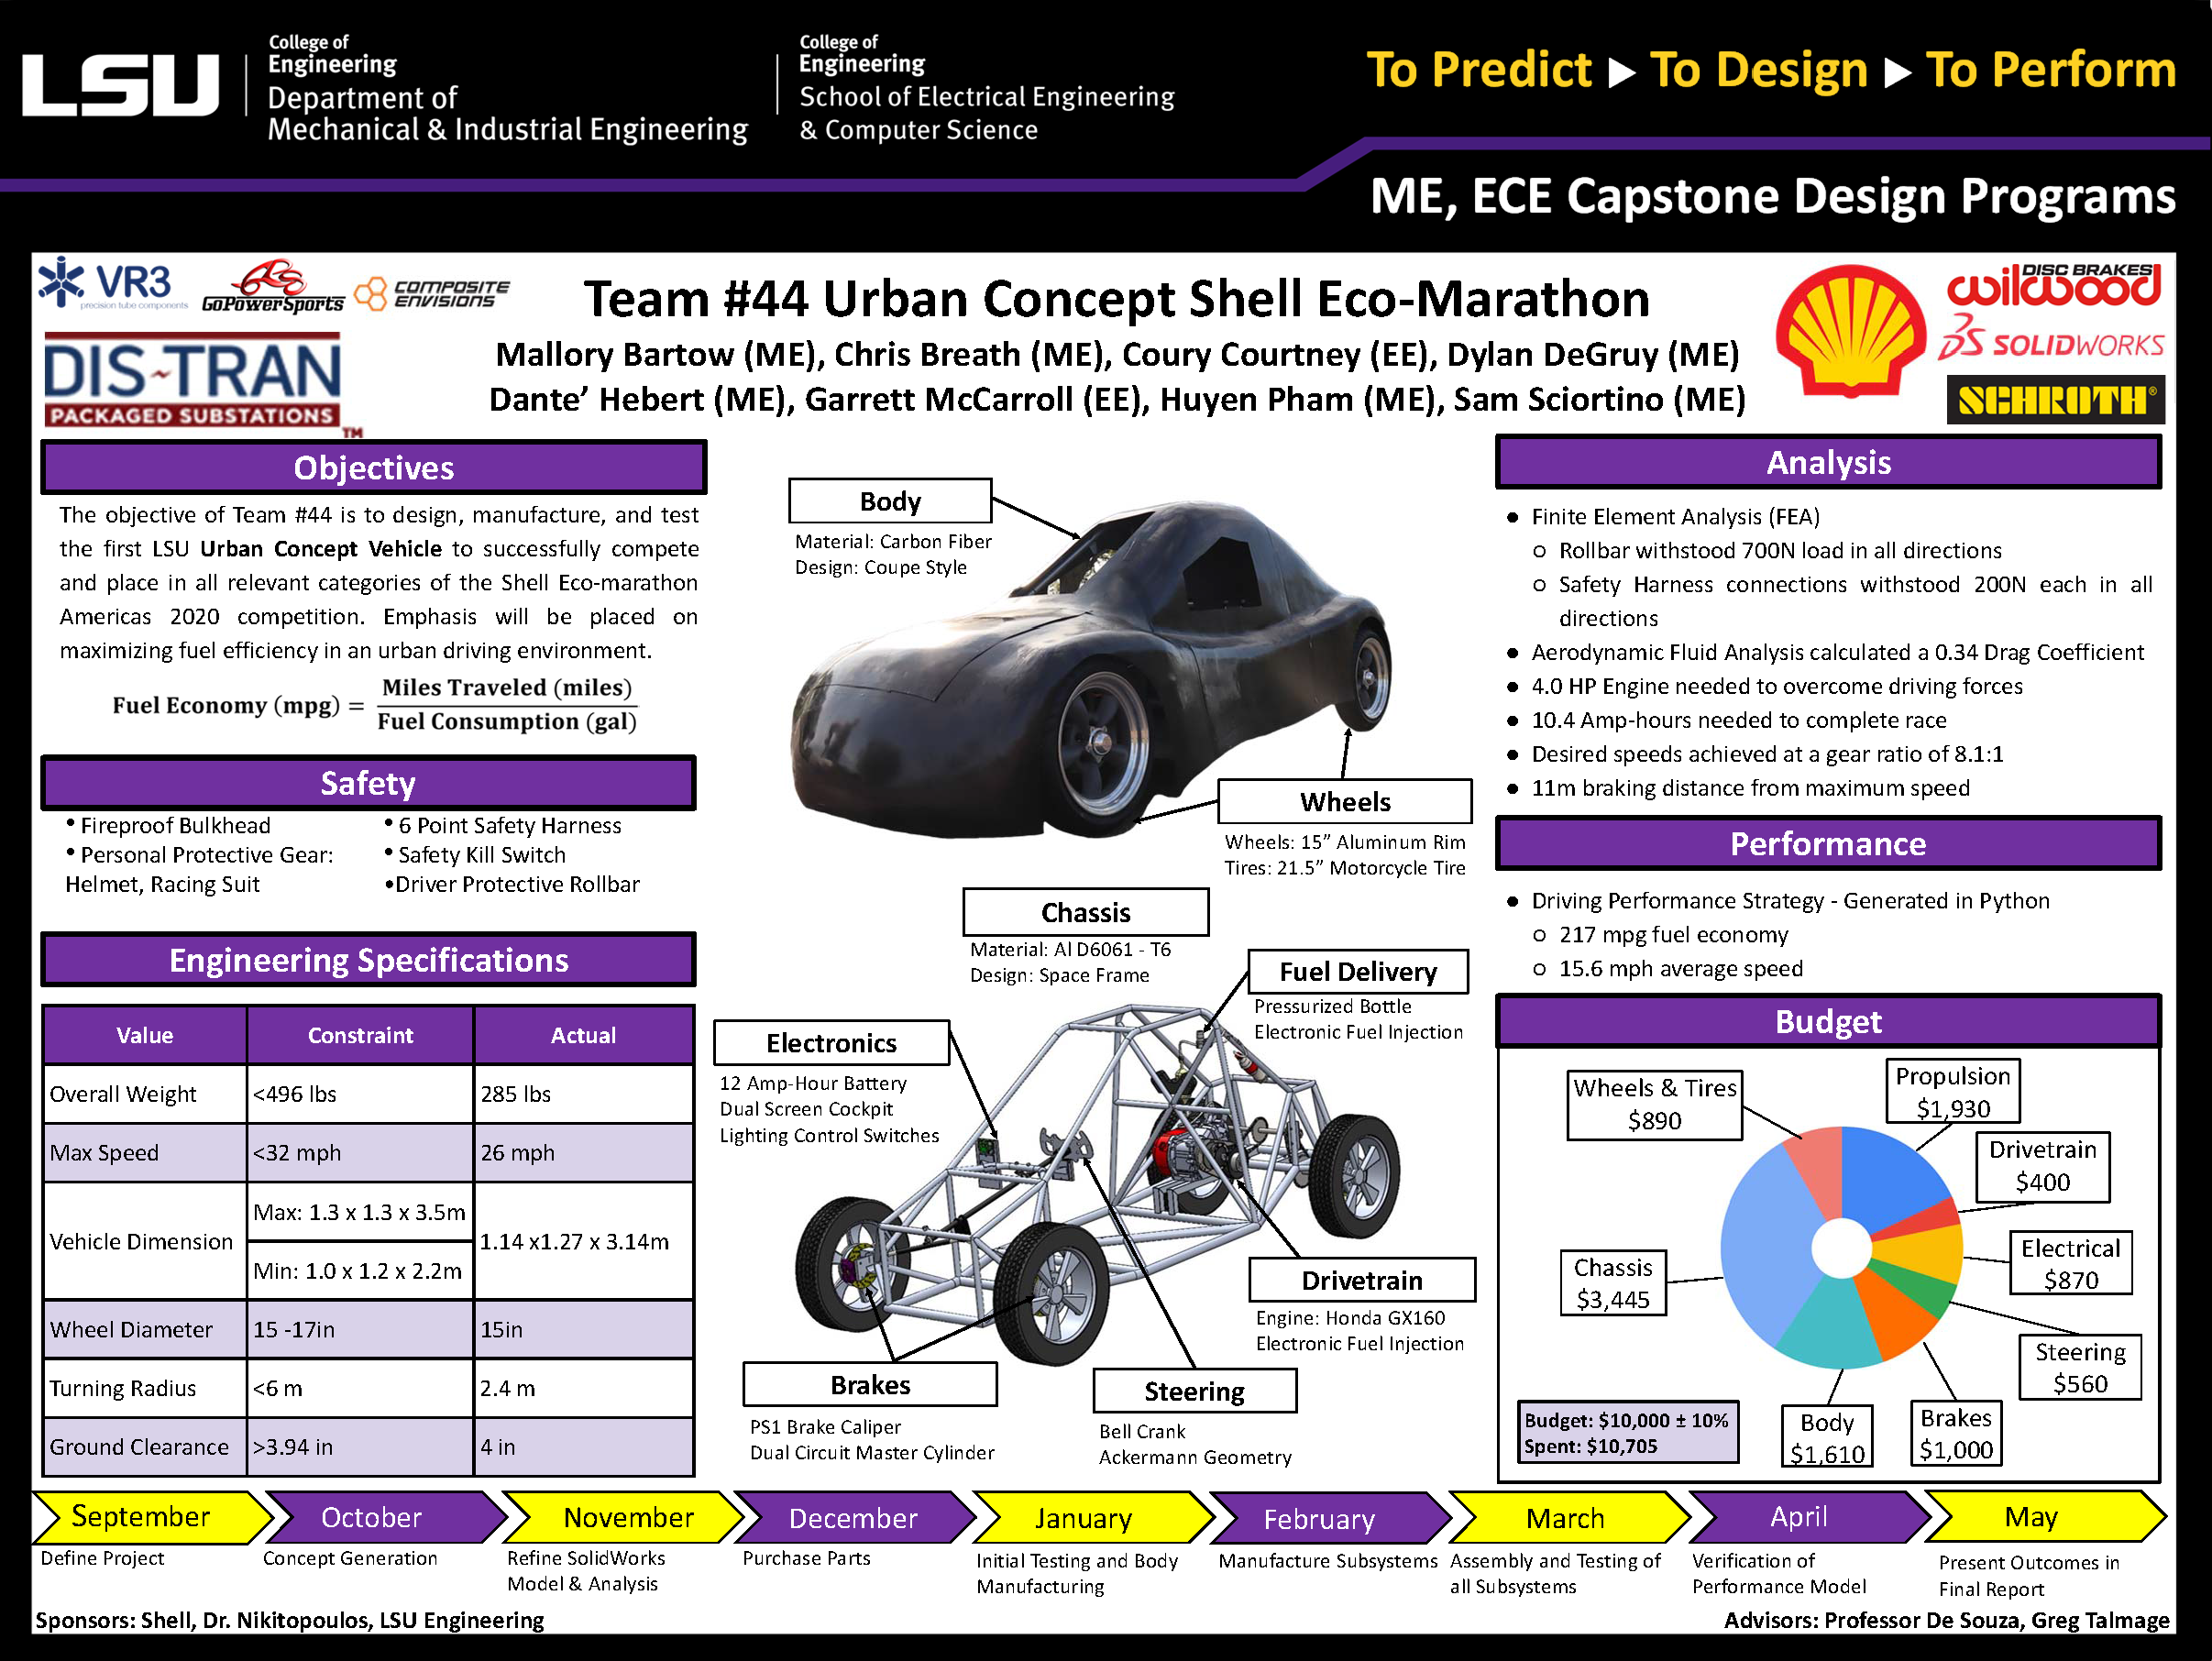 Project 44 Poster: LSU Vehicle for Shell Eco-marathon Americas 2020 - UrbanConcept (2020)